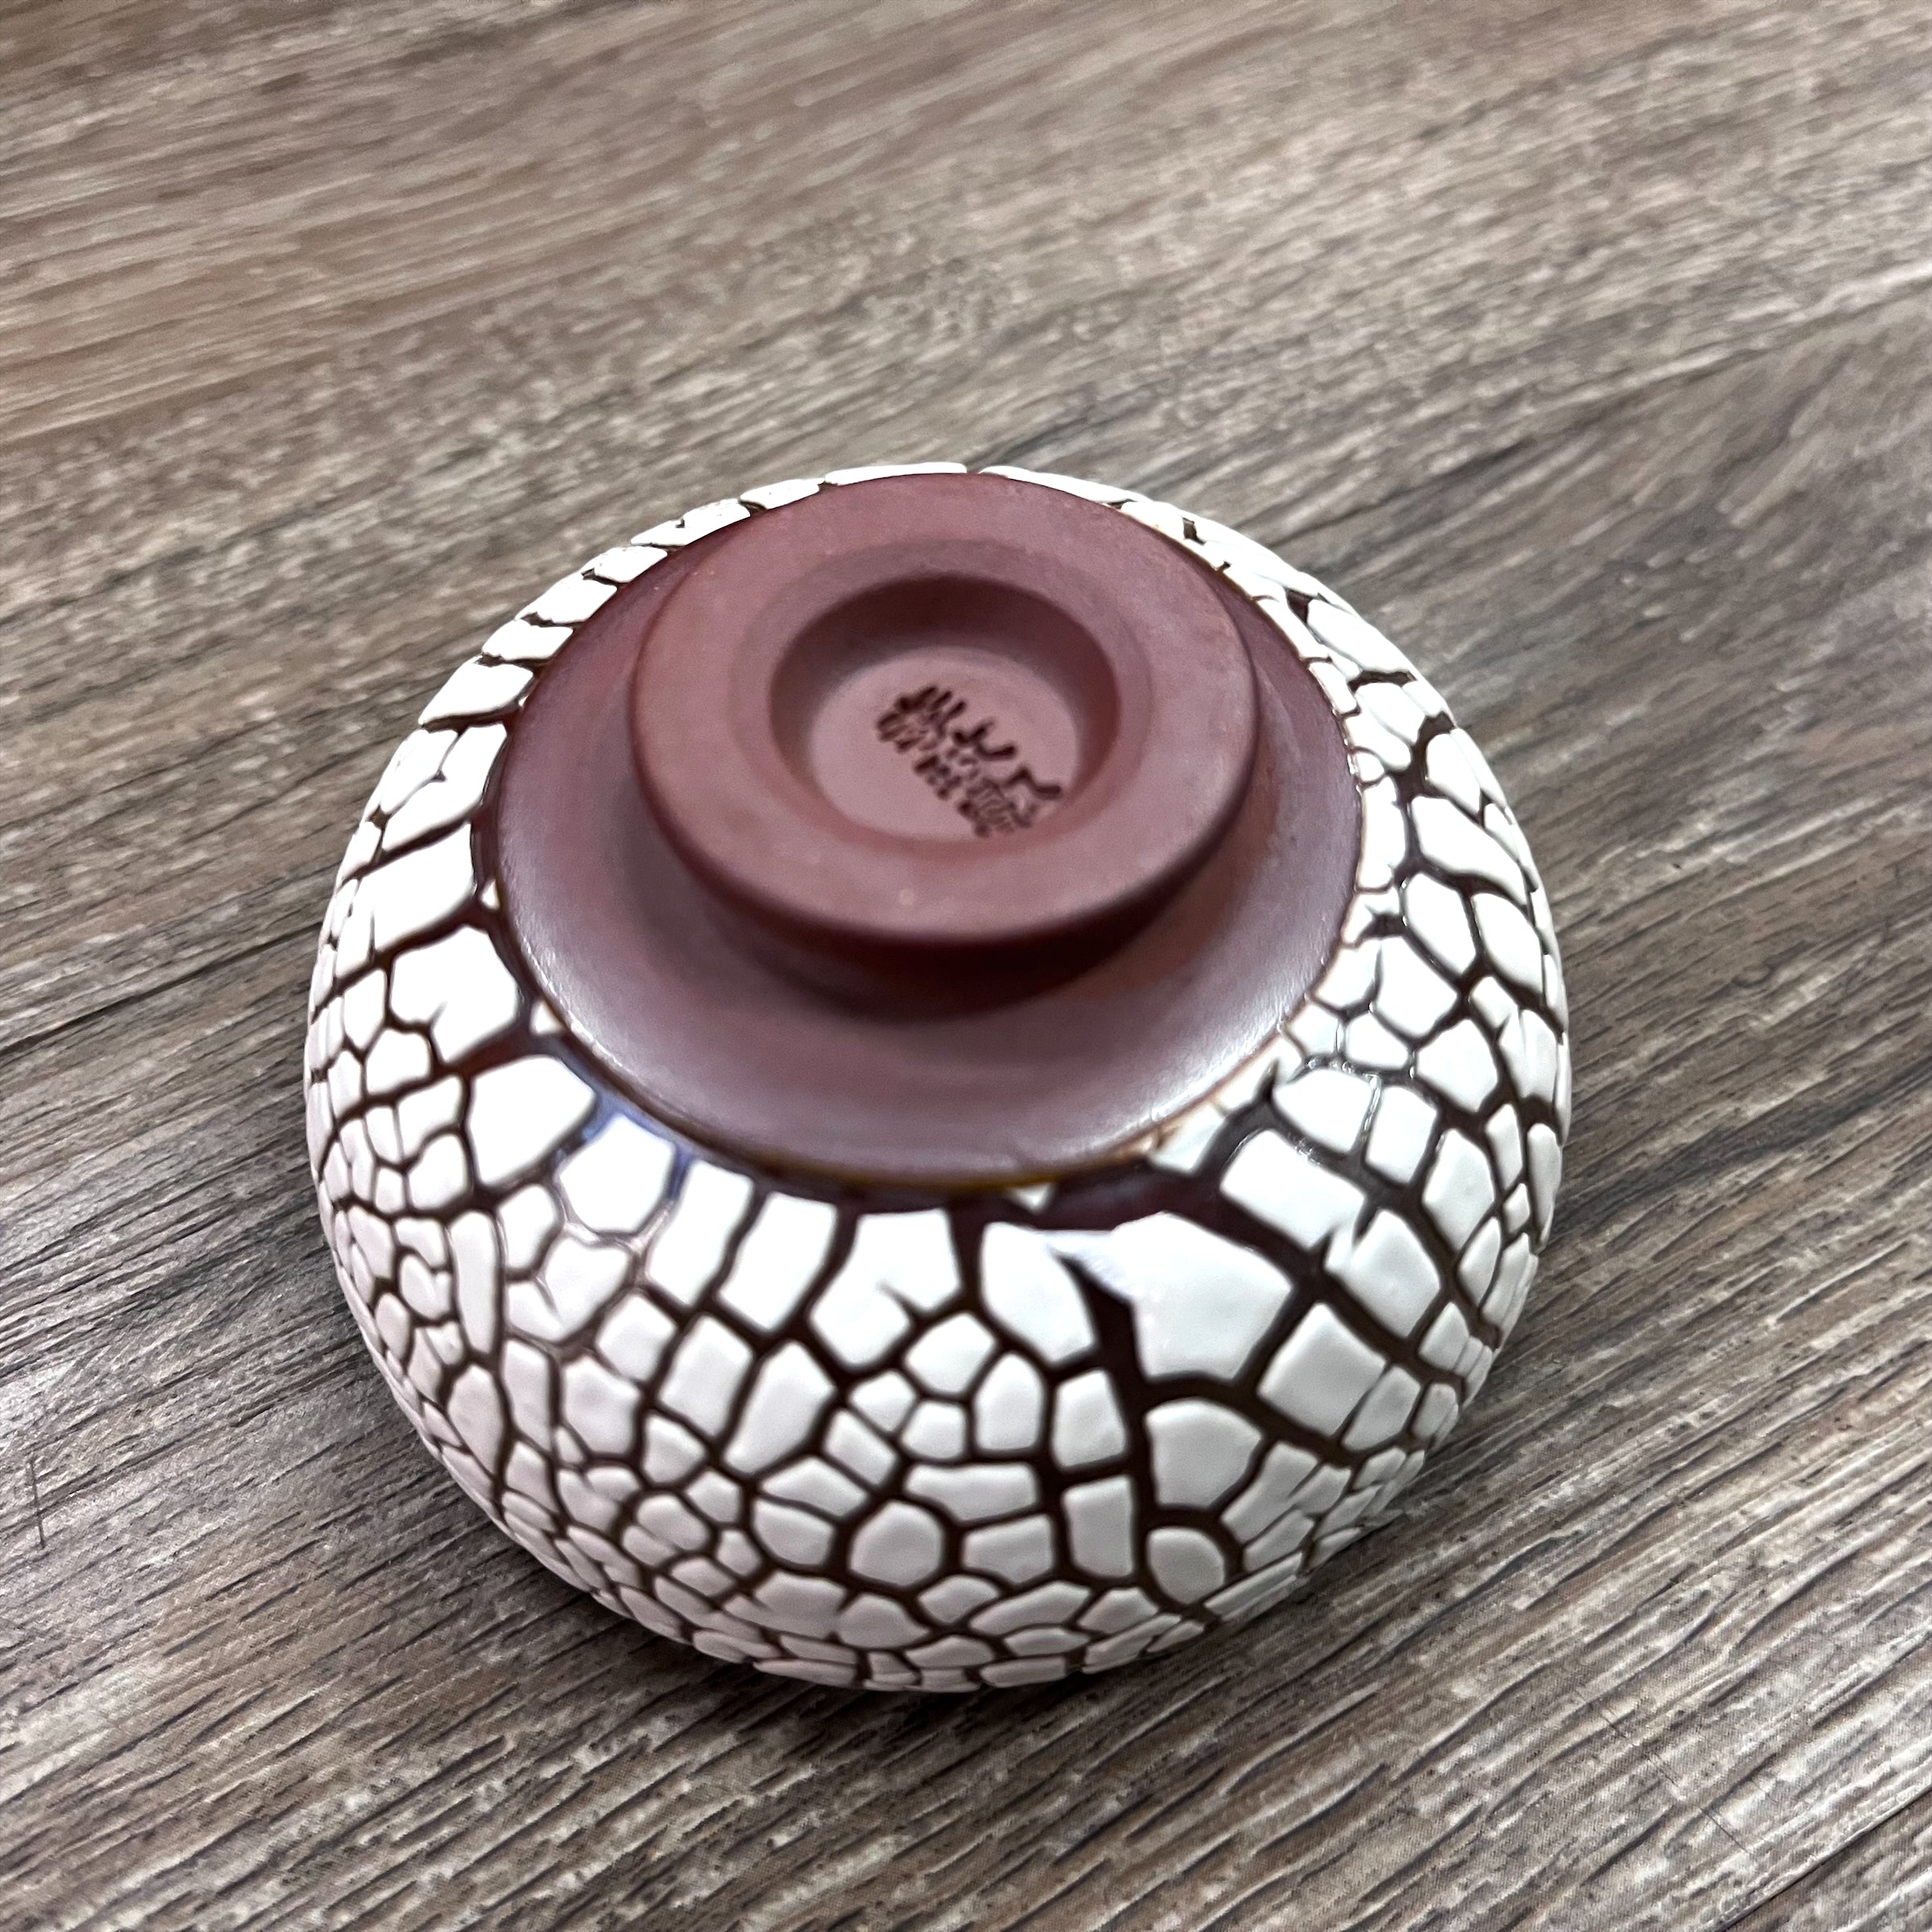 Taiwanese Handmade Wood-fired Ceramic Clay Teacup - Maze